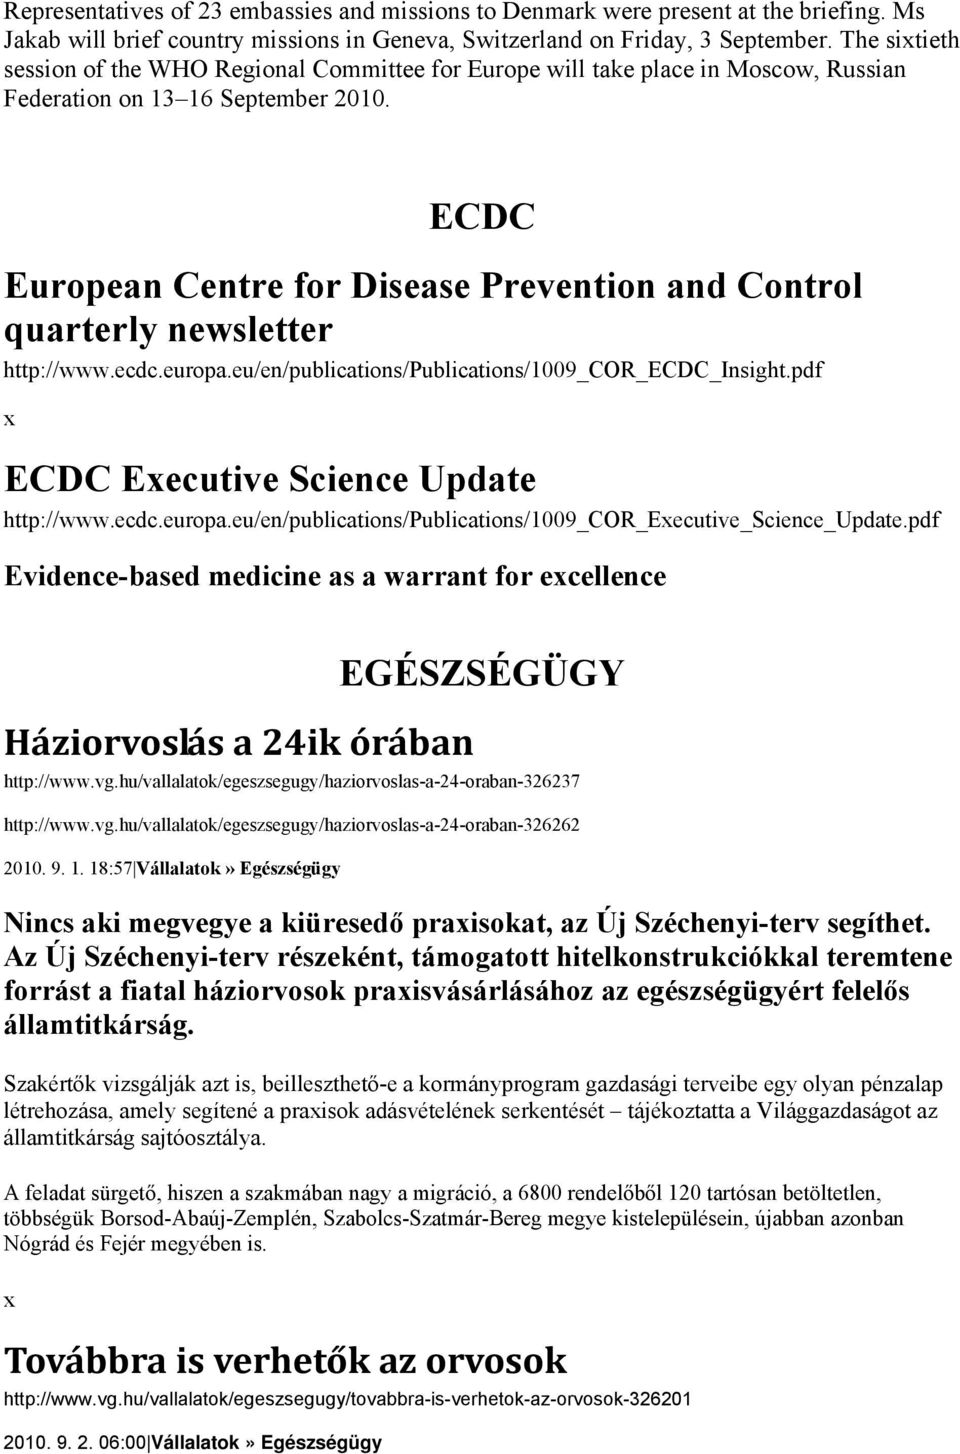 ECDC European Centre for Disease Prevention and Control quarterly newsletter http://www.ecdc.europa.eu/en/publications/publications/1009_cor_ecdc_insight.pdf ECDC Eecutive Science Update http://www.